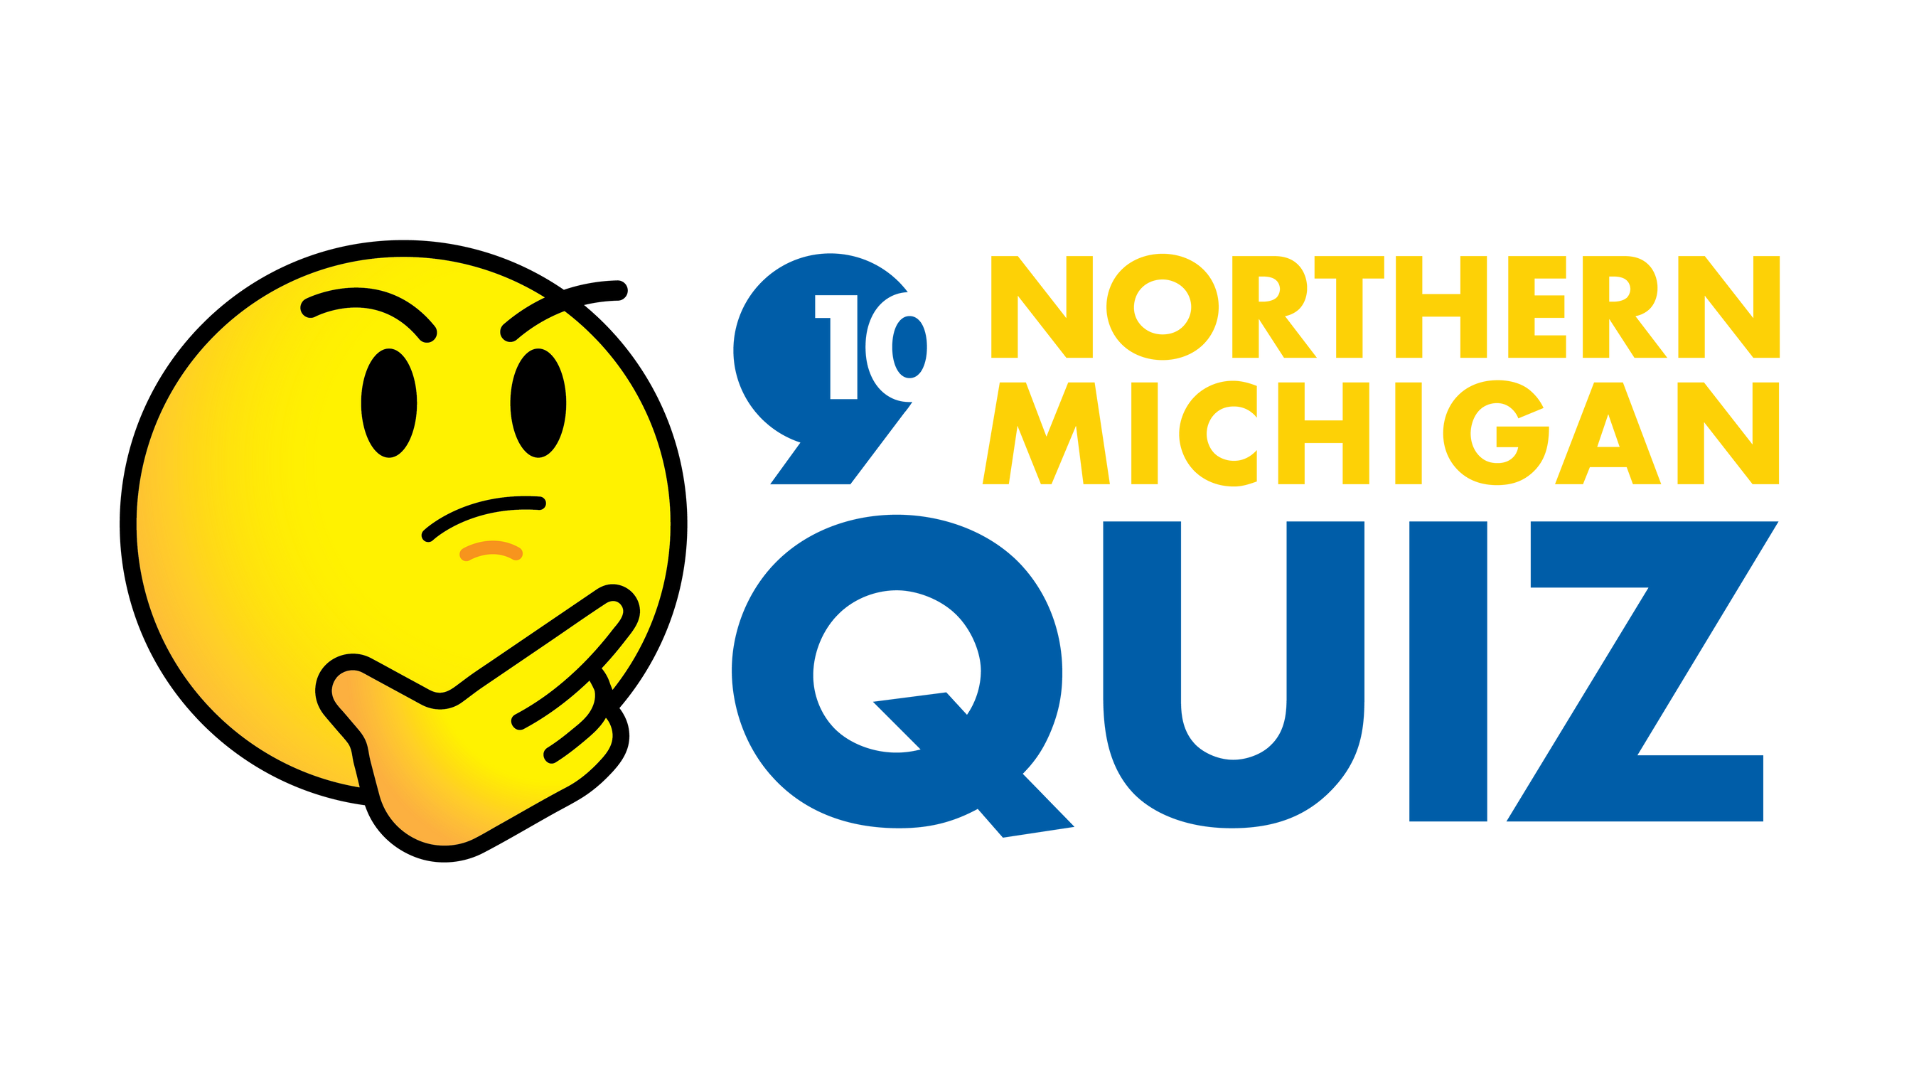 Take the 9&10 Northern Michigan quiz, April 25 edition